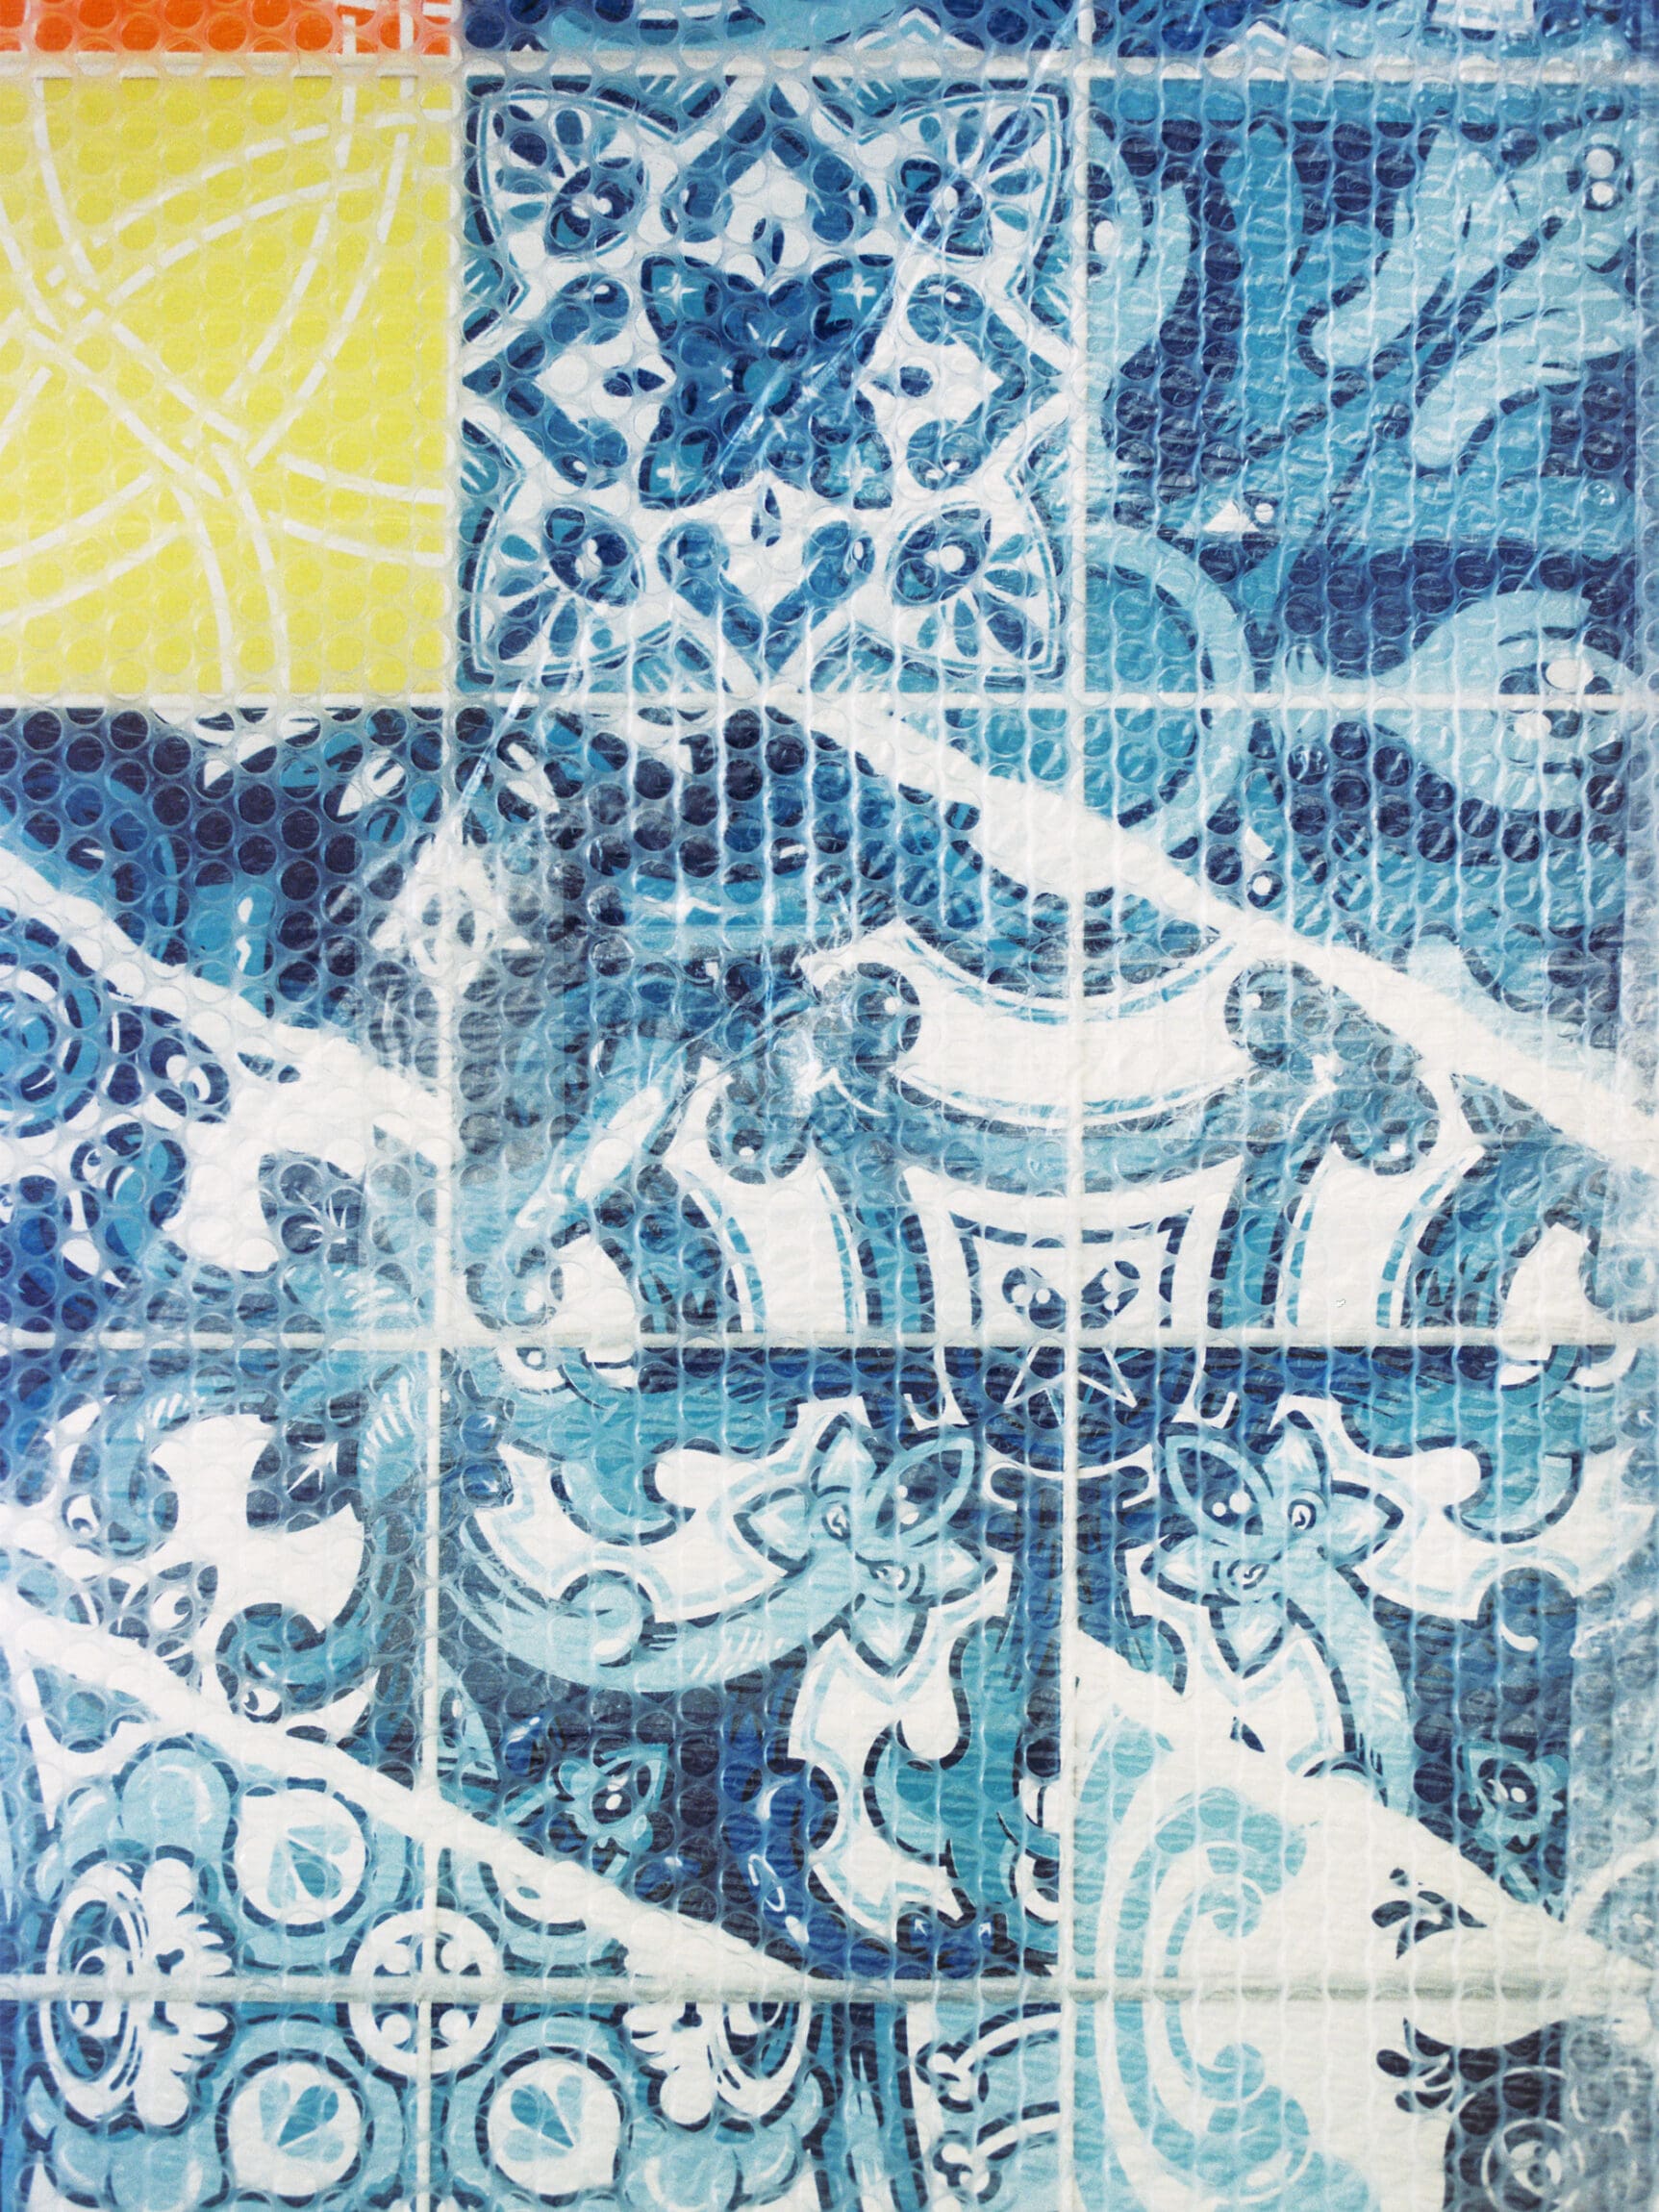 Diogo Machado, aka Add Fuel, on reinterpreting Portuguese azulejo tiles | A tile work by Diogo Machado, wrapped in bubble wrap